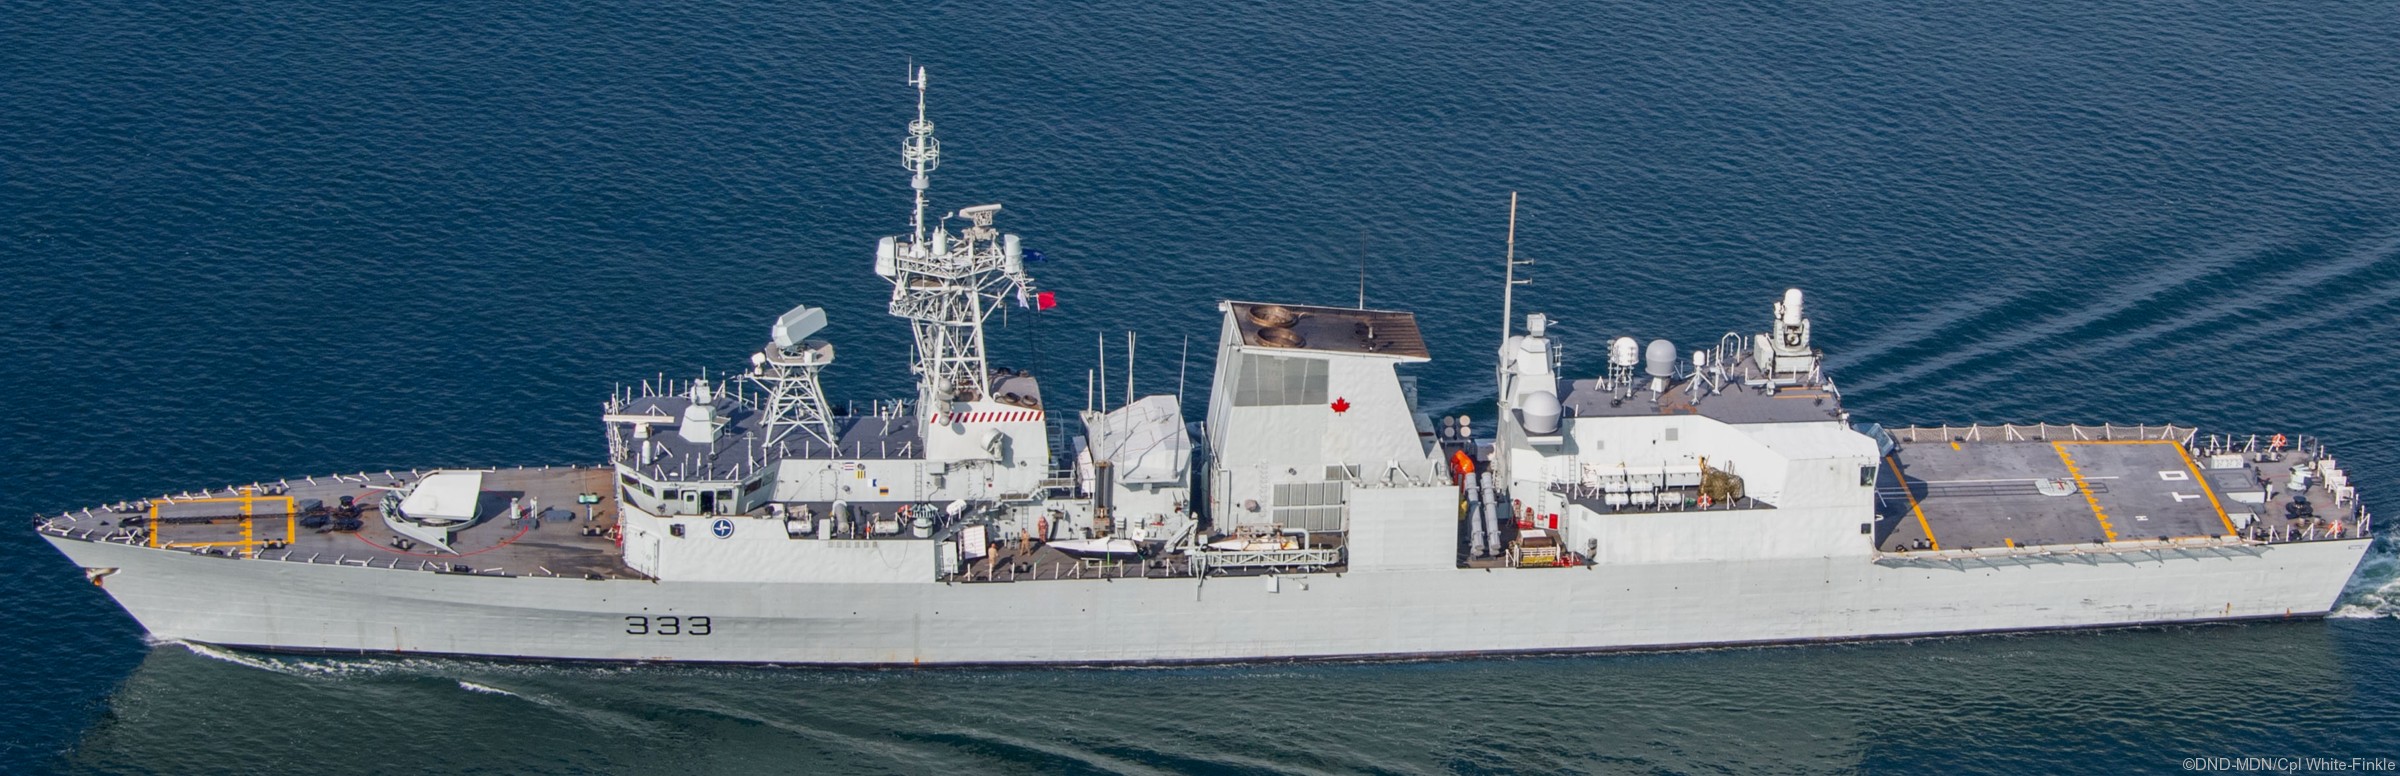 ffh-333 hmcs toronto halifax class helicopter patrol frigate ncsm royal canadian navy 03